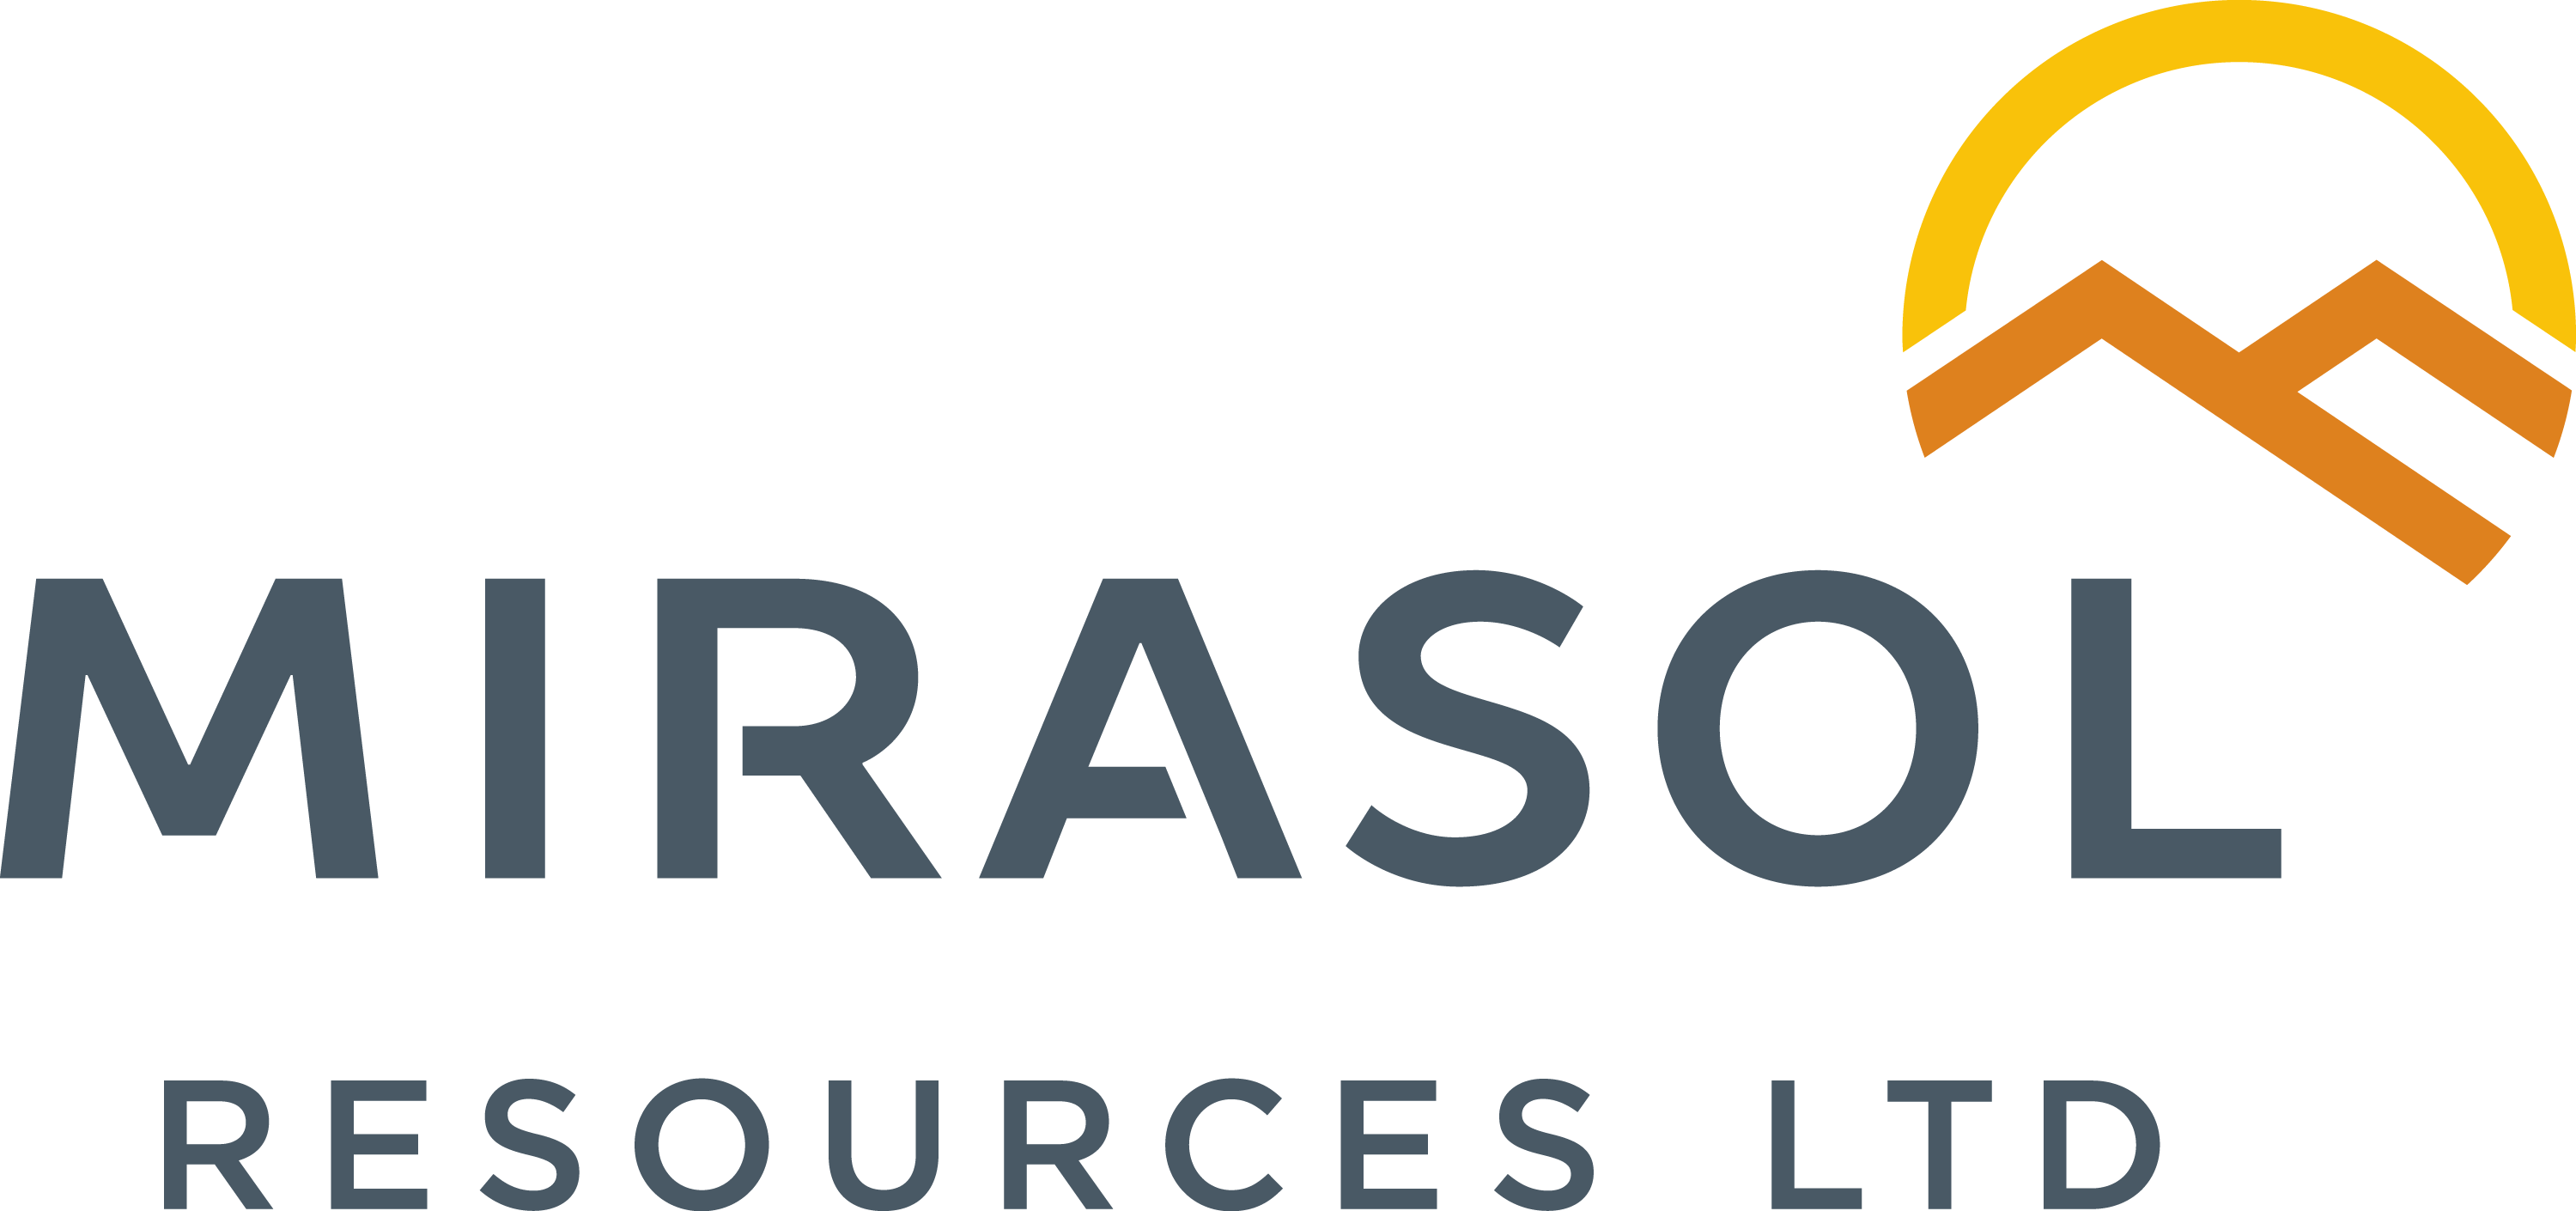 Resources Logo - Atacama Puna Generative Program - Mirasol Resources Ltd